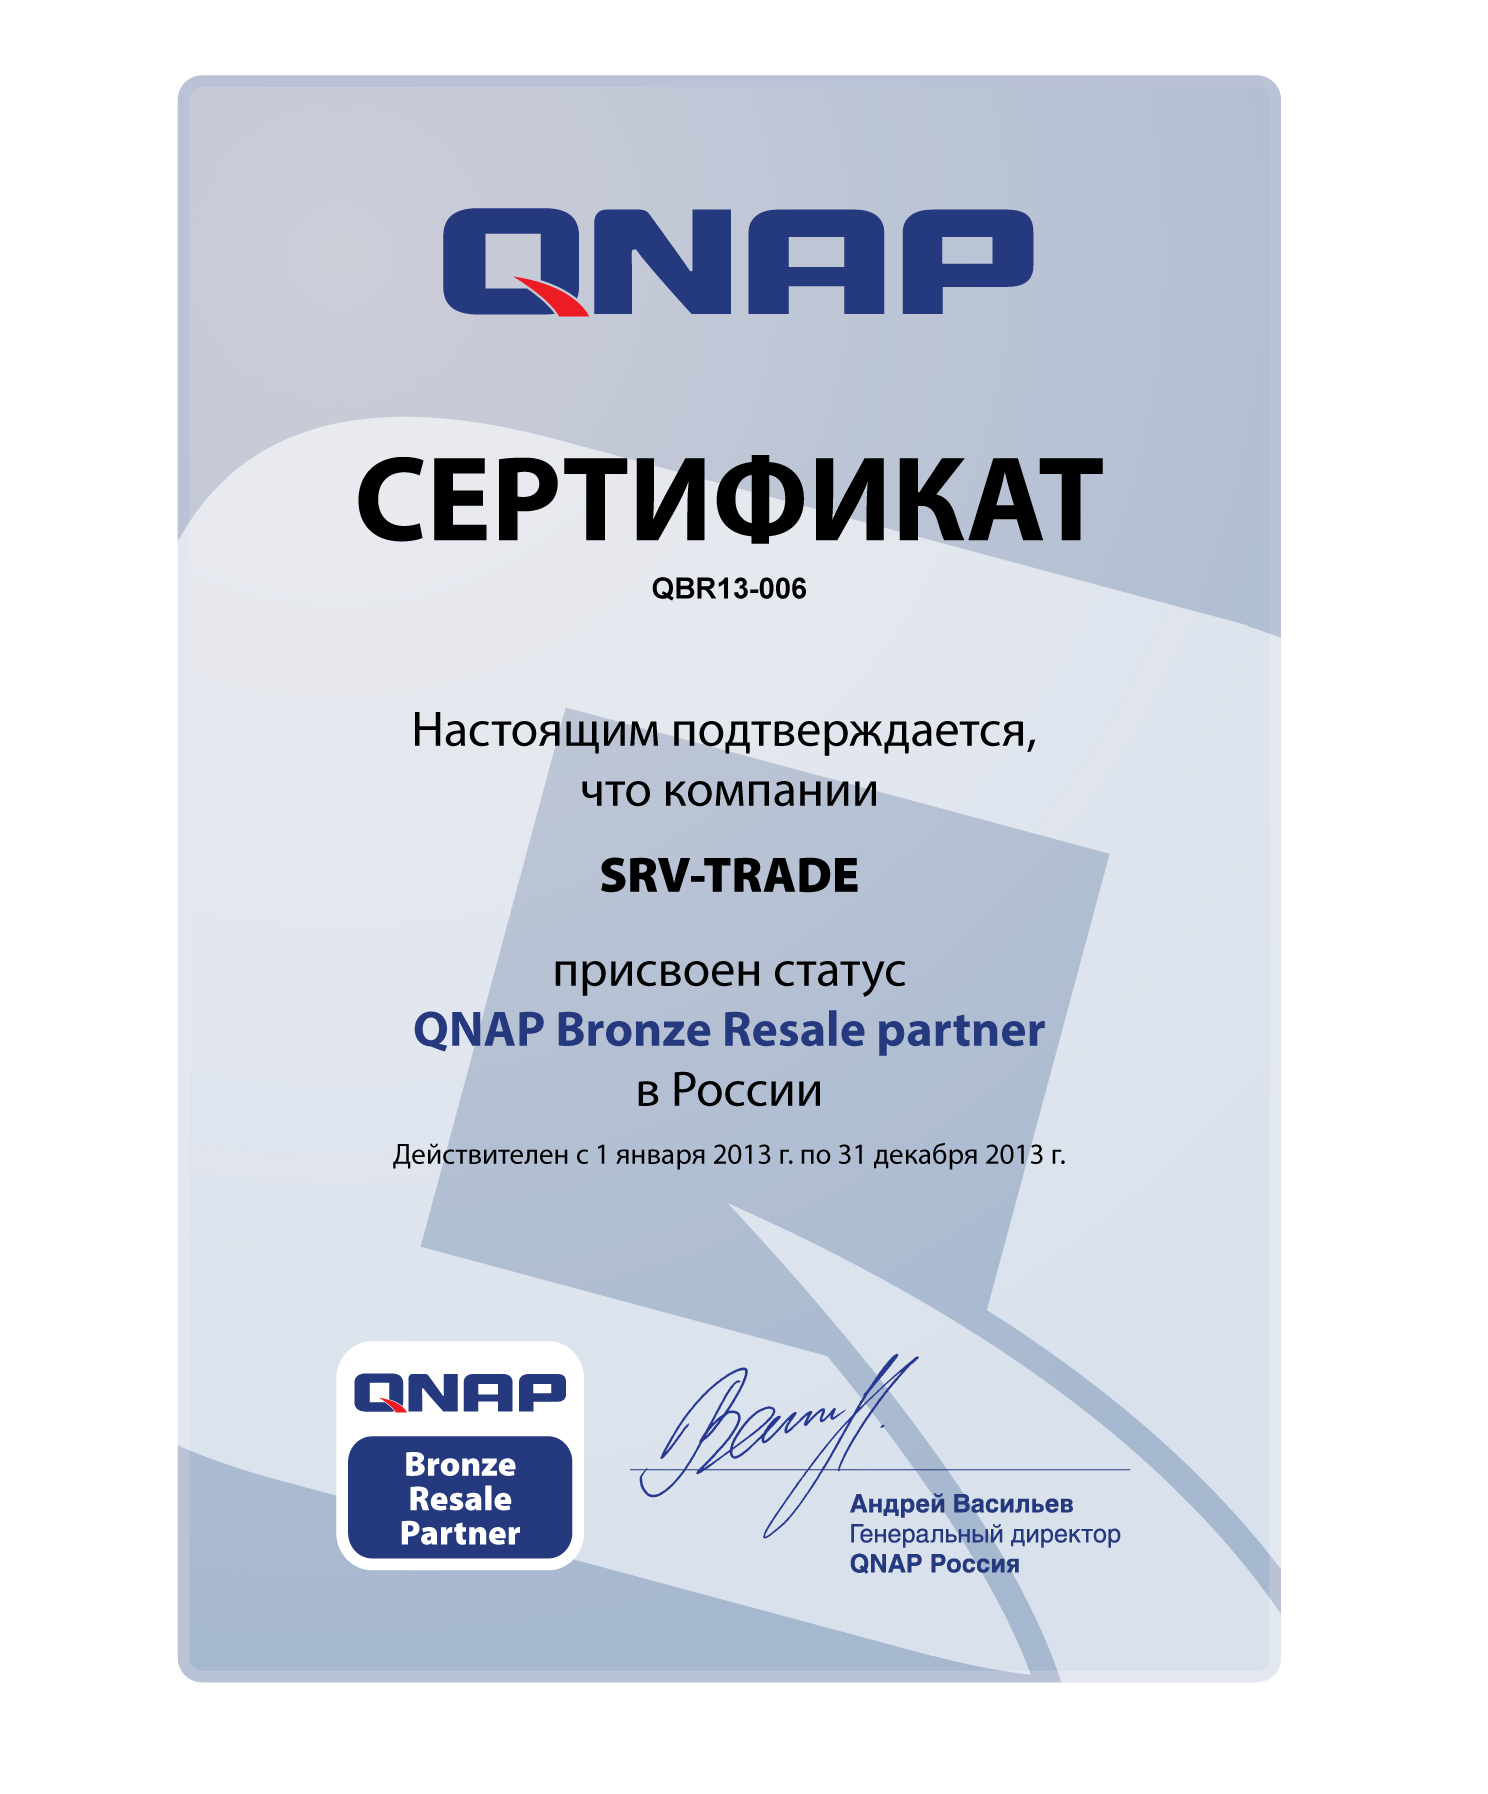 Сертификат статуса QNAP Bronze Resale Partner